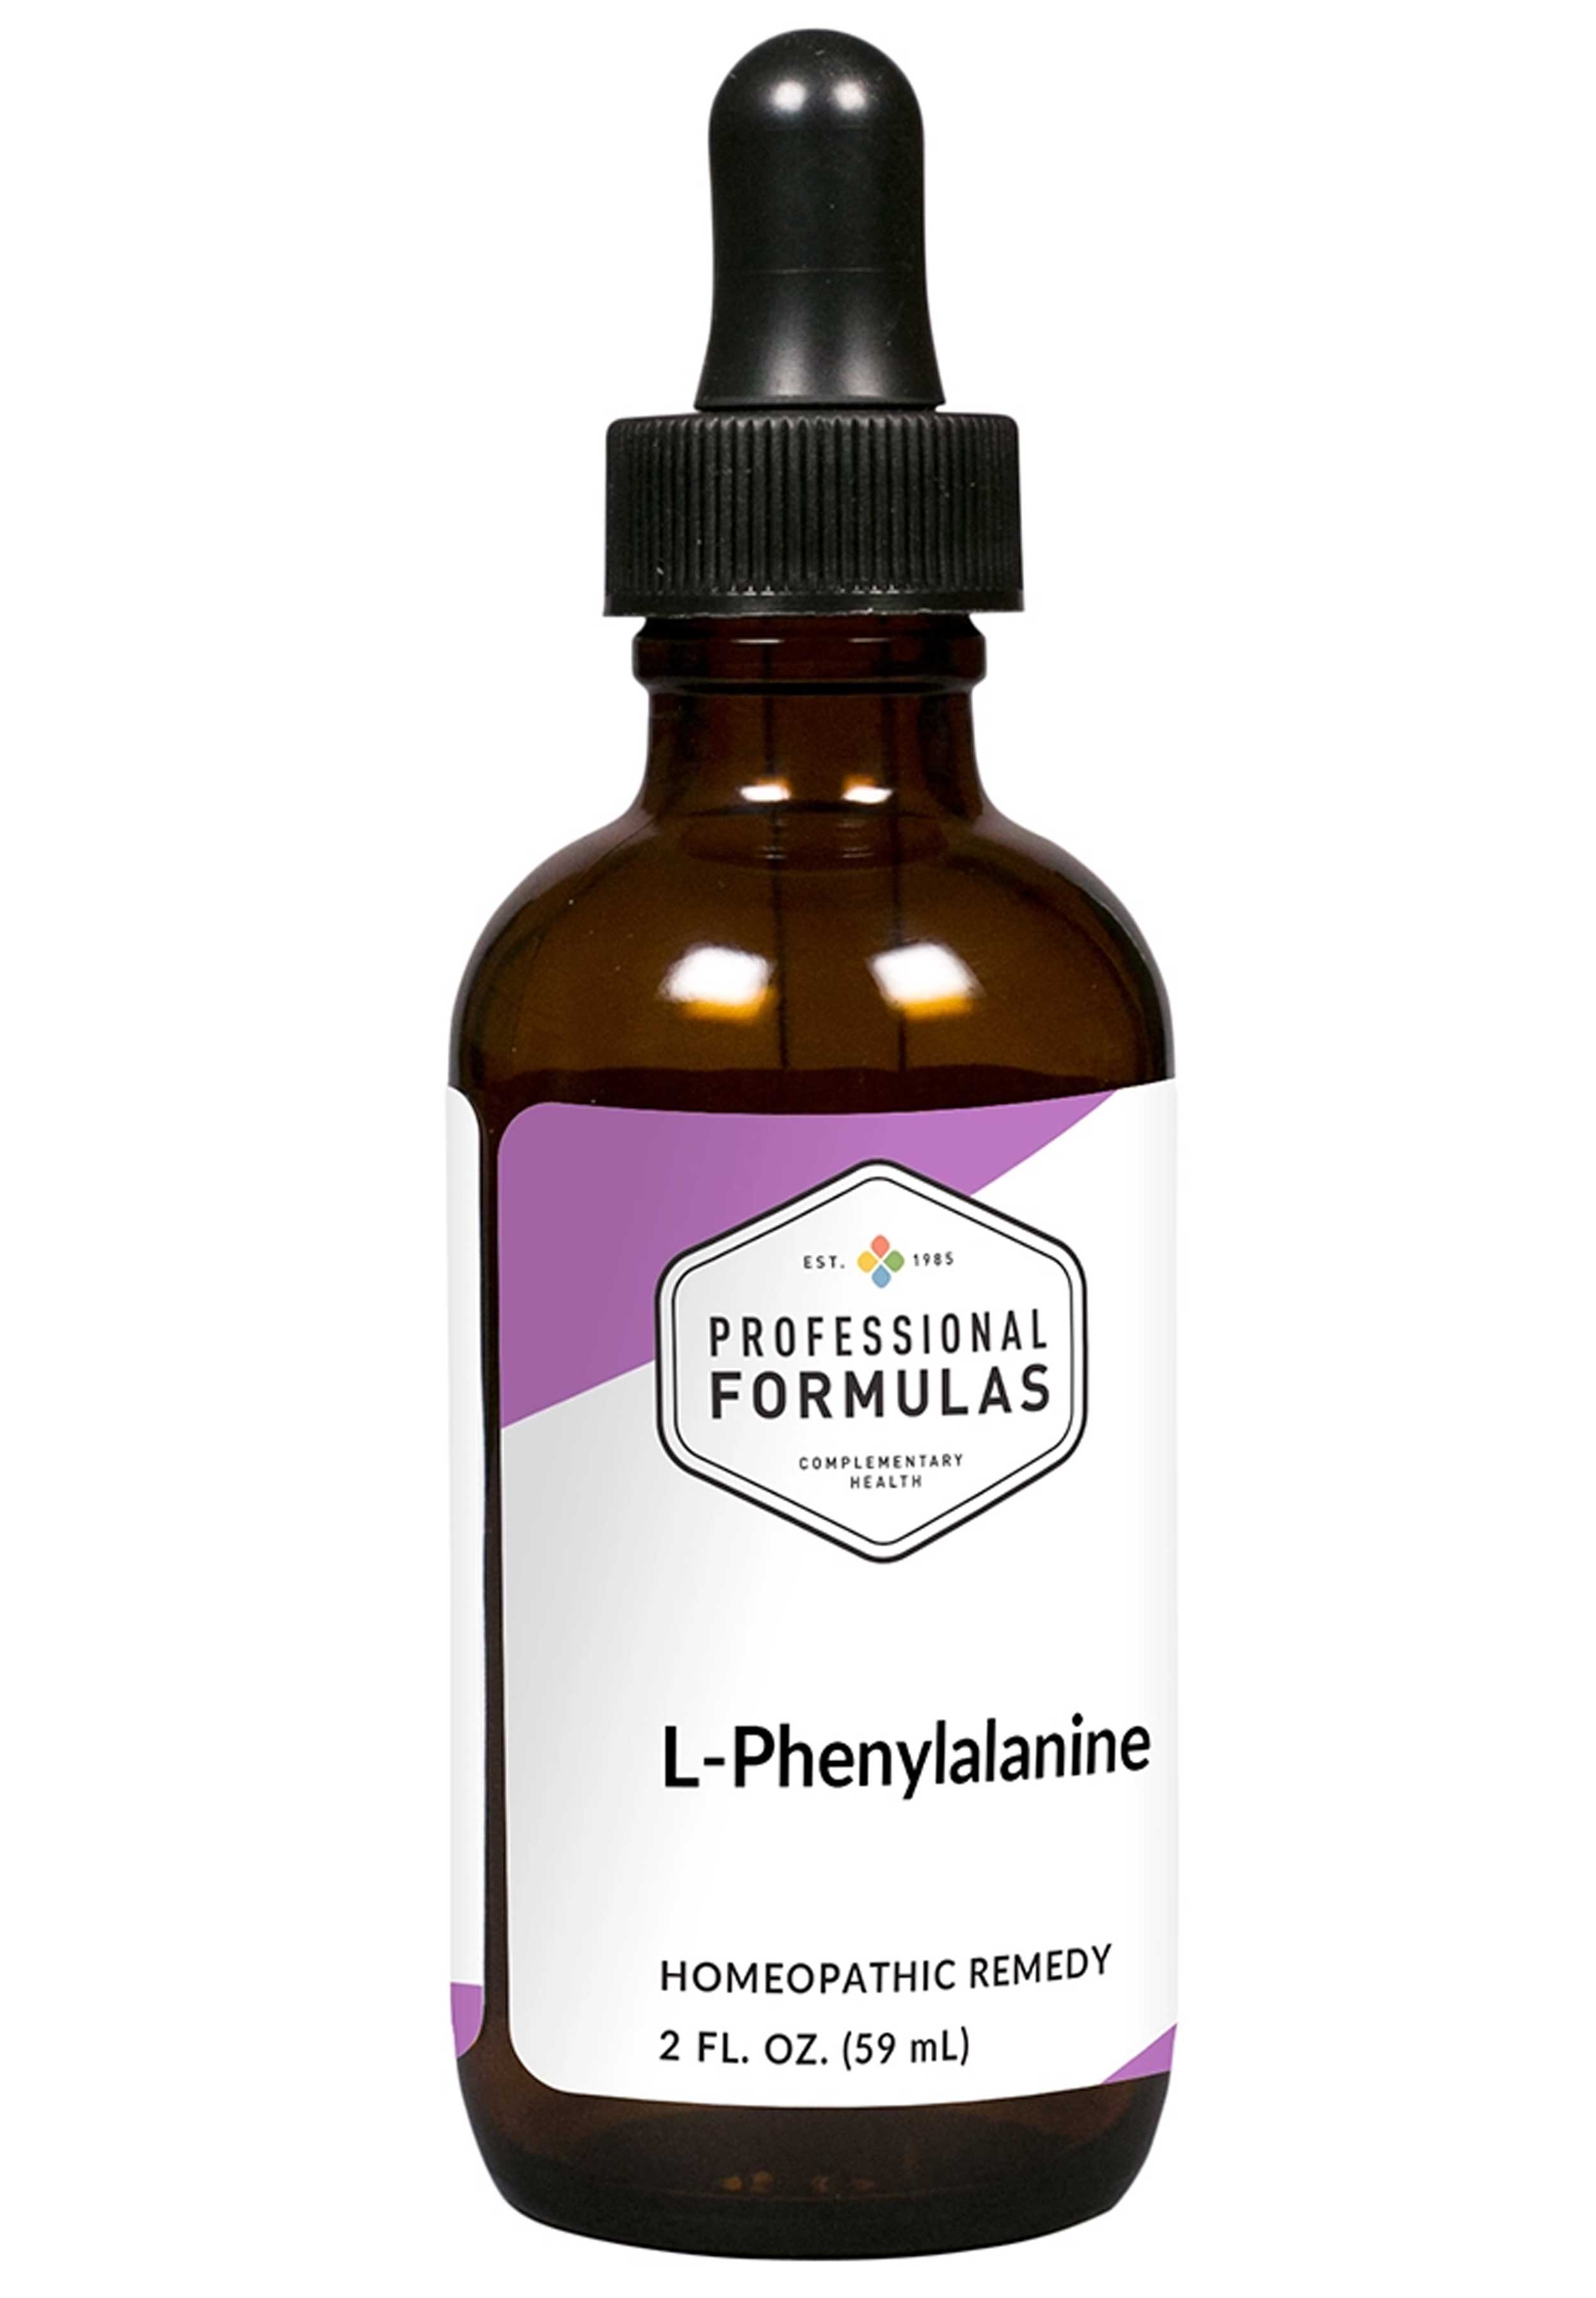 Professional Formulas L-Phenylalanine